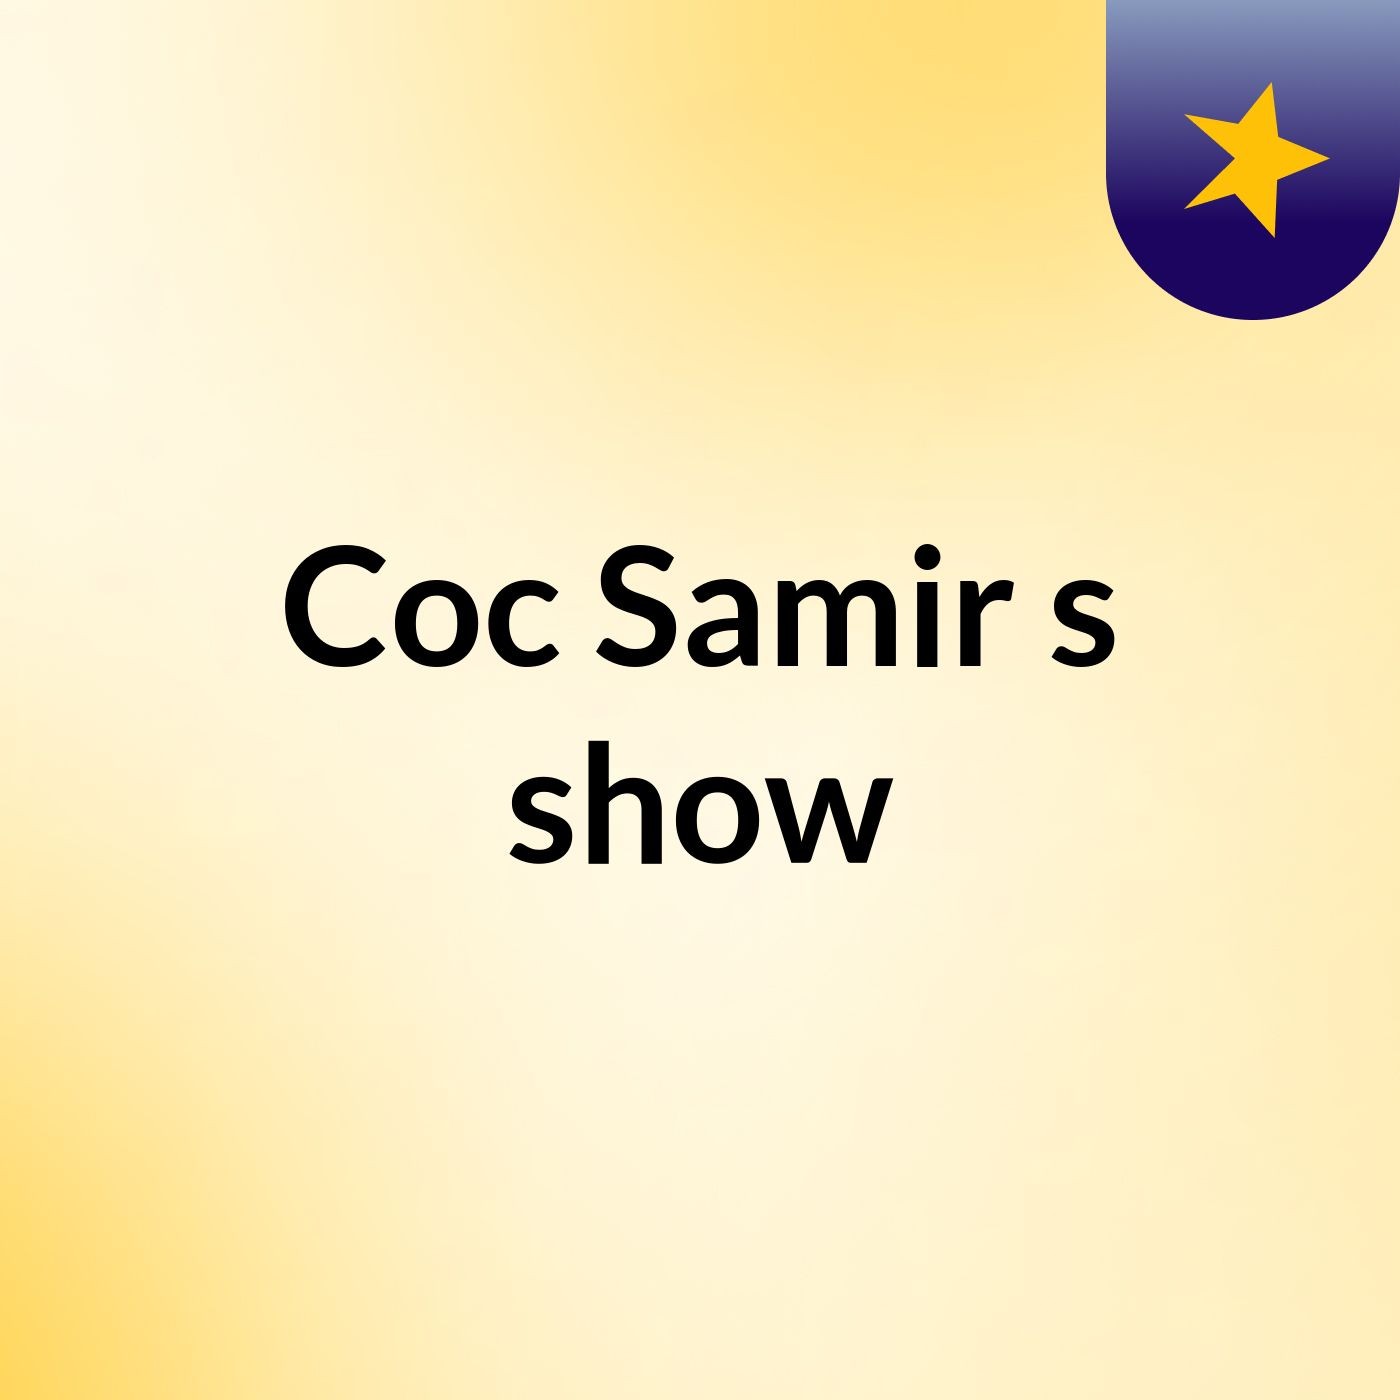 Coc Samir's show